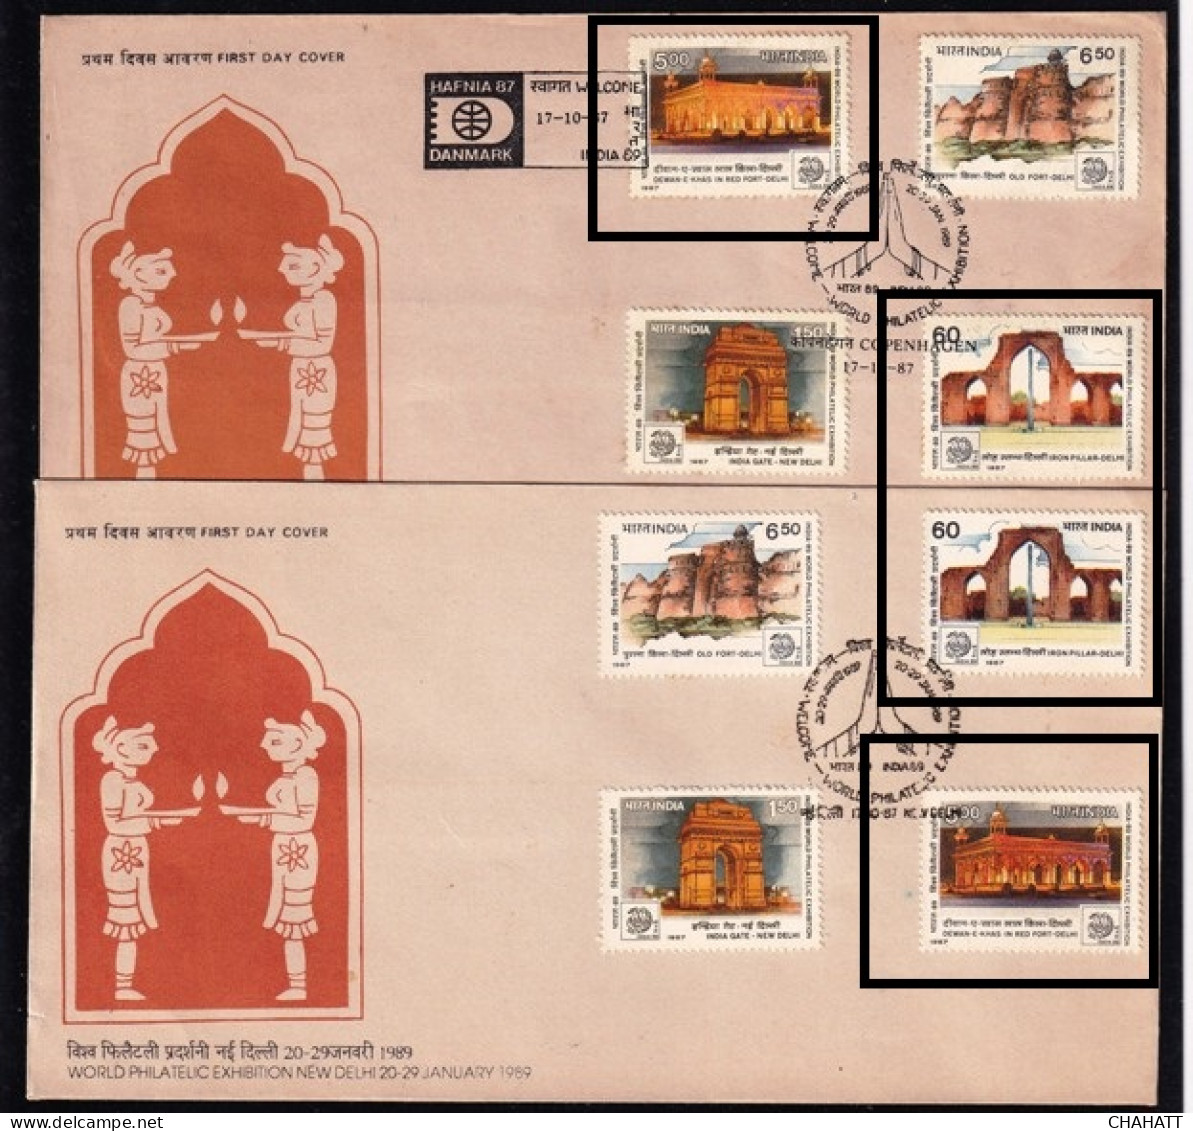 INDIA-1987-HERITAGE MONUMENTS- SET OF FDCs -CANCELLED IN INDIA AND DENMARK- ERROR- COLOR VARIETIES-BX4-17 - Abarten Und Kuriositäten